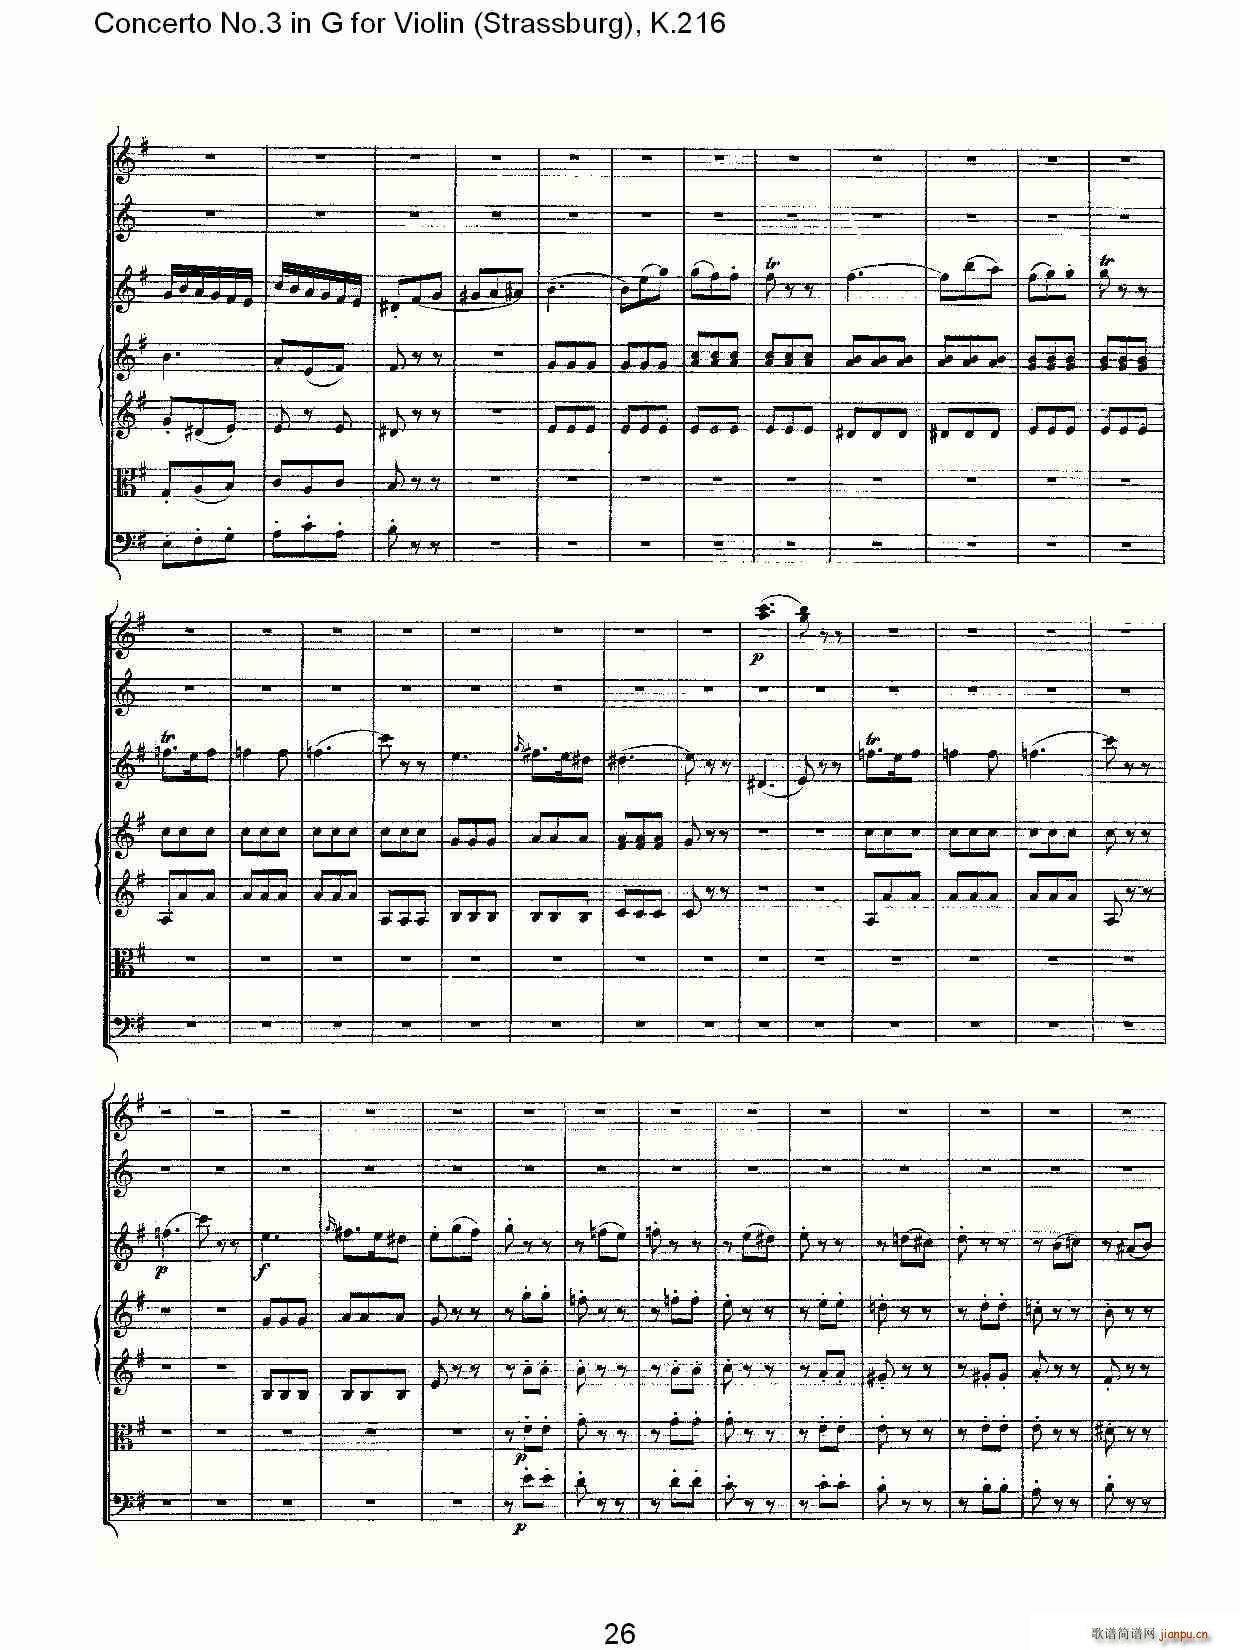 Concerto No.3 in G for Violin K.216(С)26